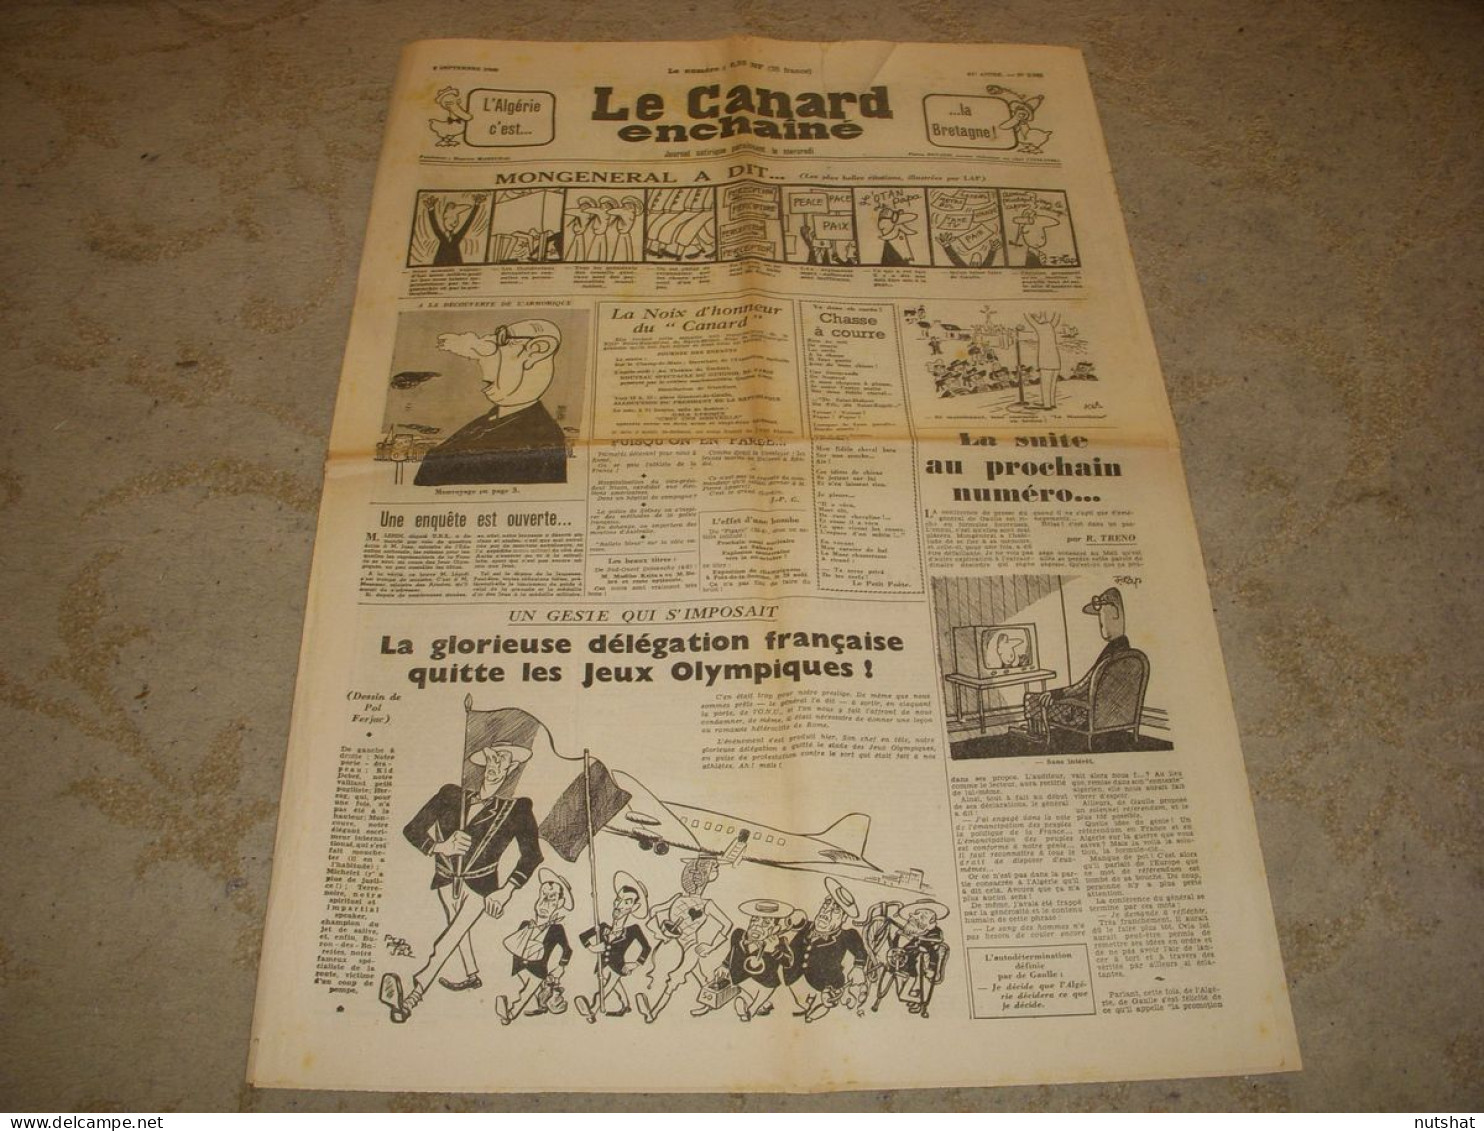 CANARD ENCHAINE 2081 07.09.1960 Jean NOHAIN Jean RIEUX Edna O'BRIEN L'OPUS DEI - Politiek